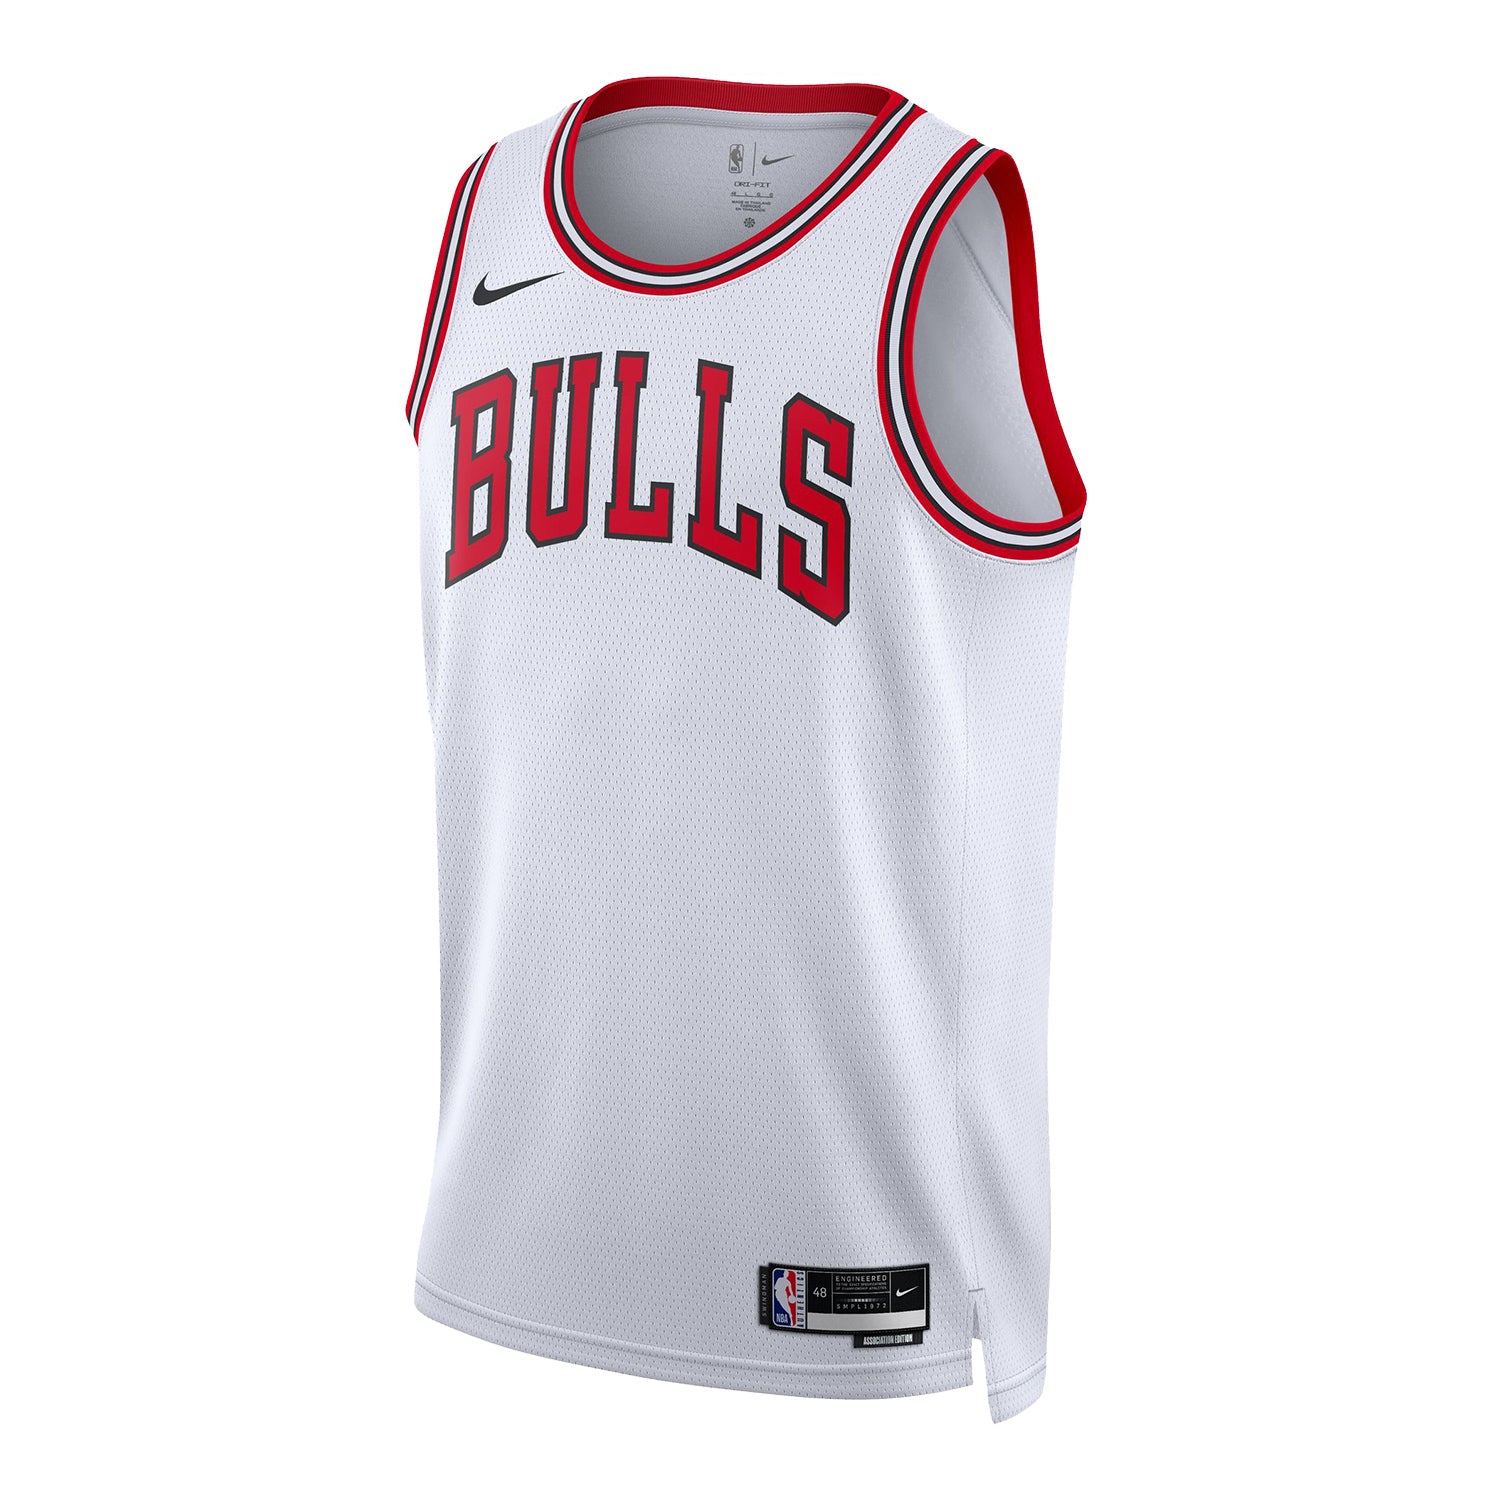 Nike Men's Chicago Bulls Lonzo Ball #2 Black T-Shirt, Large